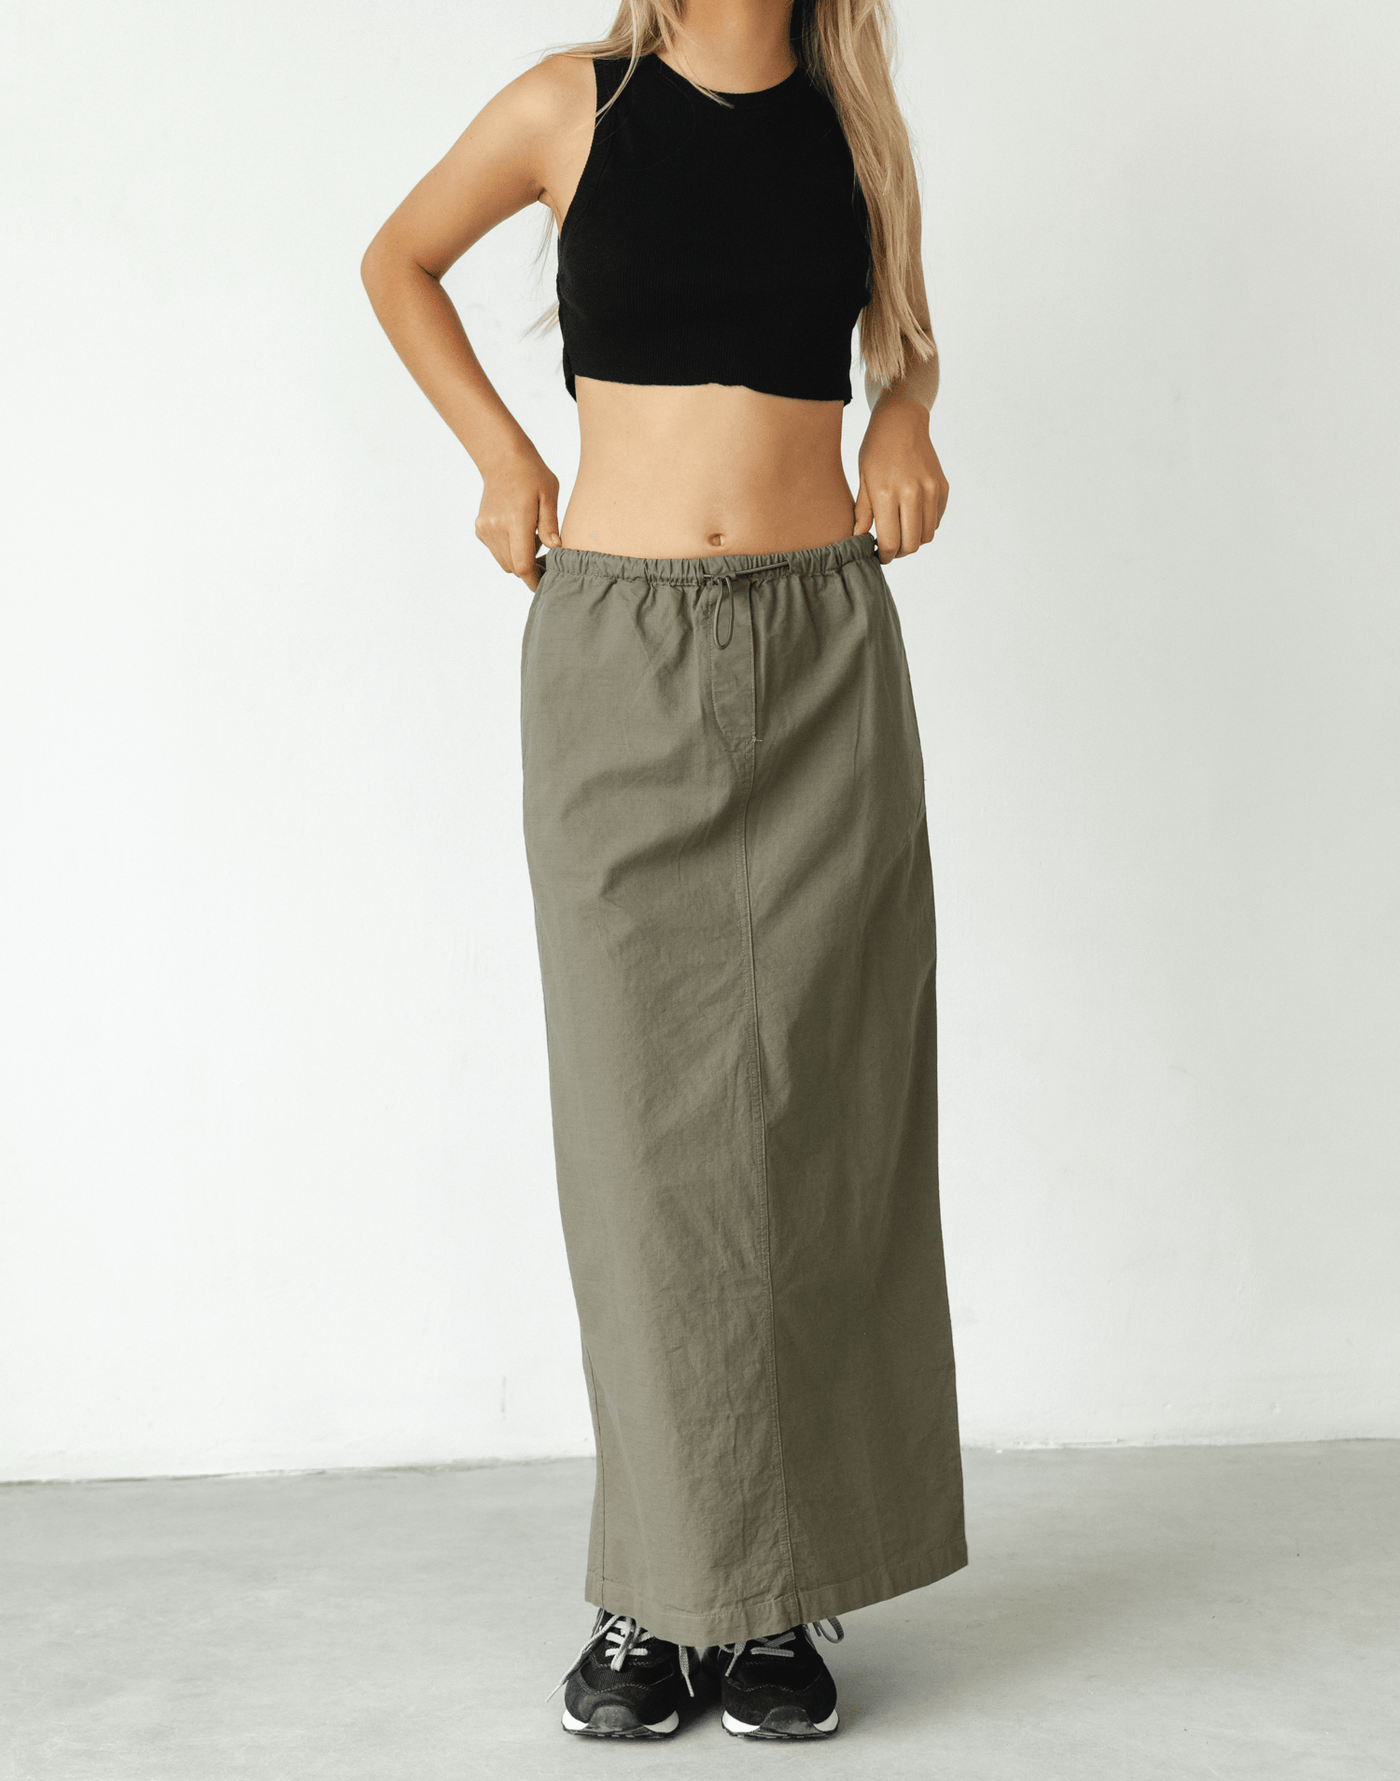 Myrtle Midi Skirt (Khaki) - Khaki Midi Skirt - Women's Skirts - Charcoal Clothing